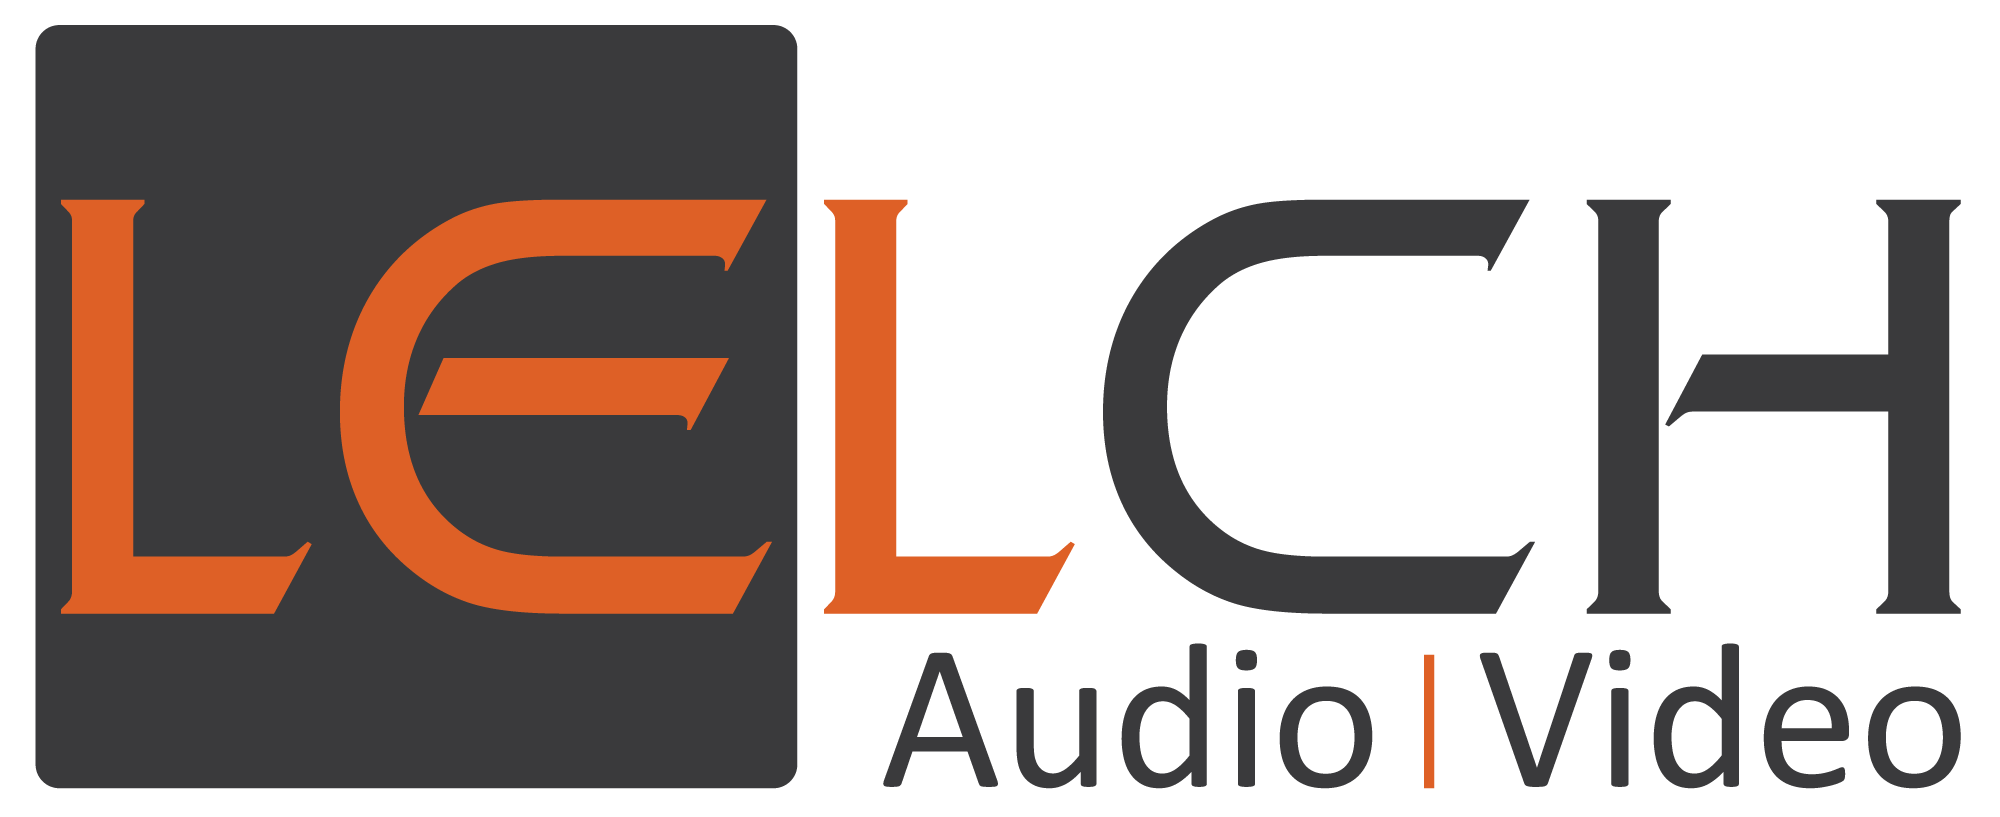 Lelch Audio Video Logo